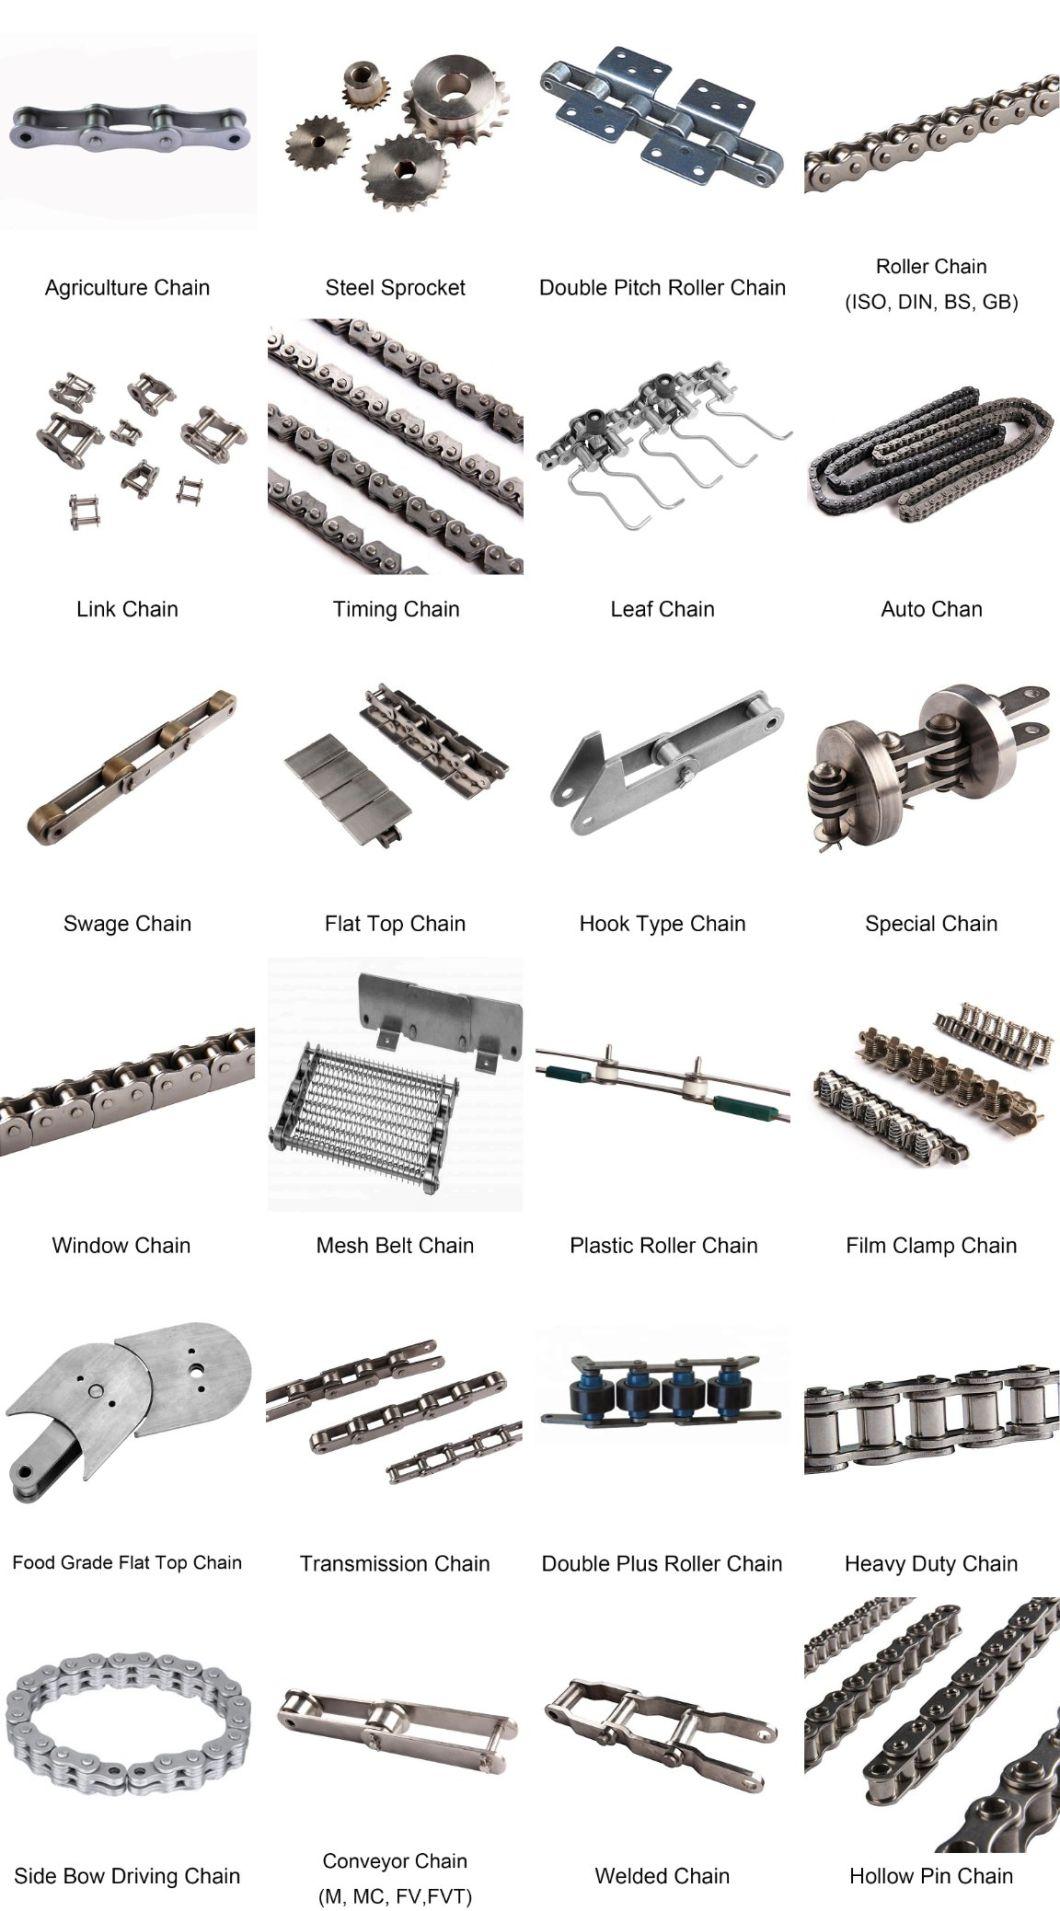 Non-Standard Customized Stainless Steel Conveyor Belt High Temperature Hoof Chain Great Wall Belt Chain